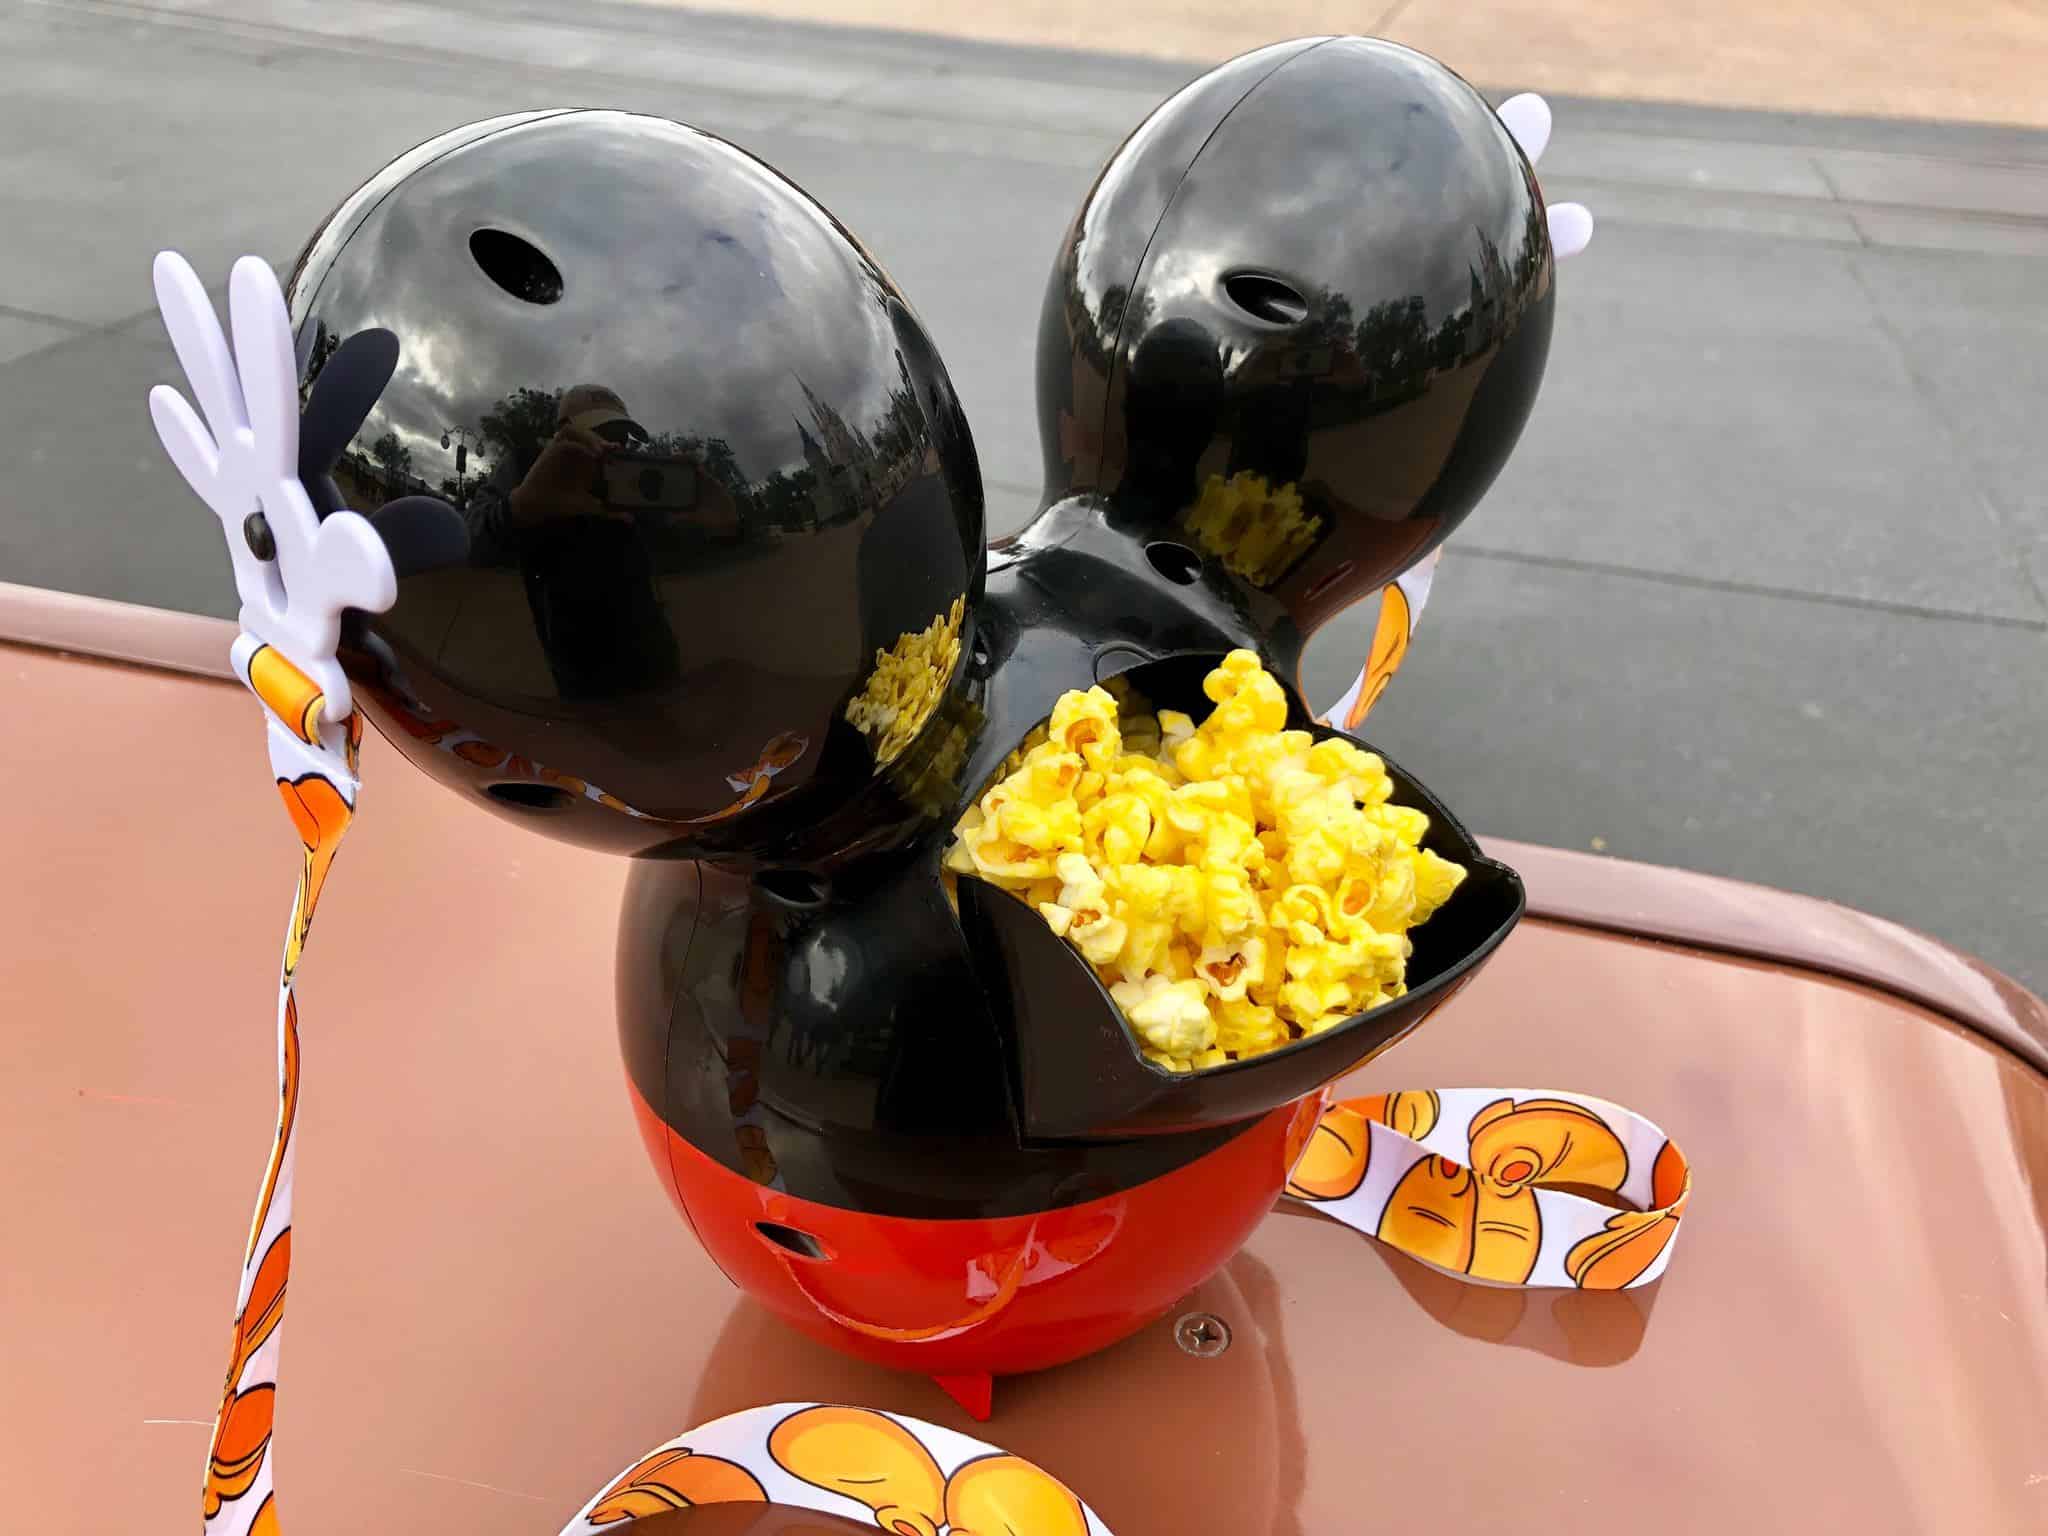 PHOTOS New Mickey Mouse Balloon Popcorn Bucket Arrives at The Magic